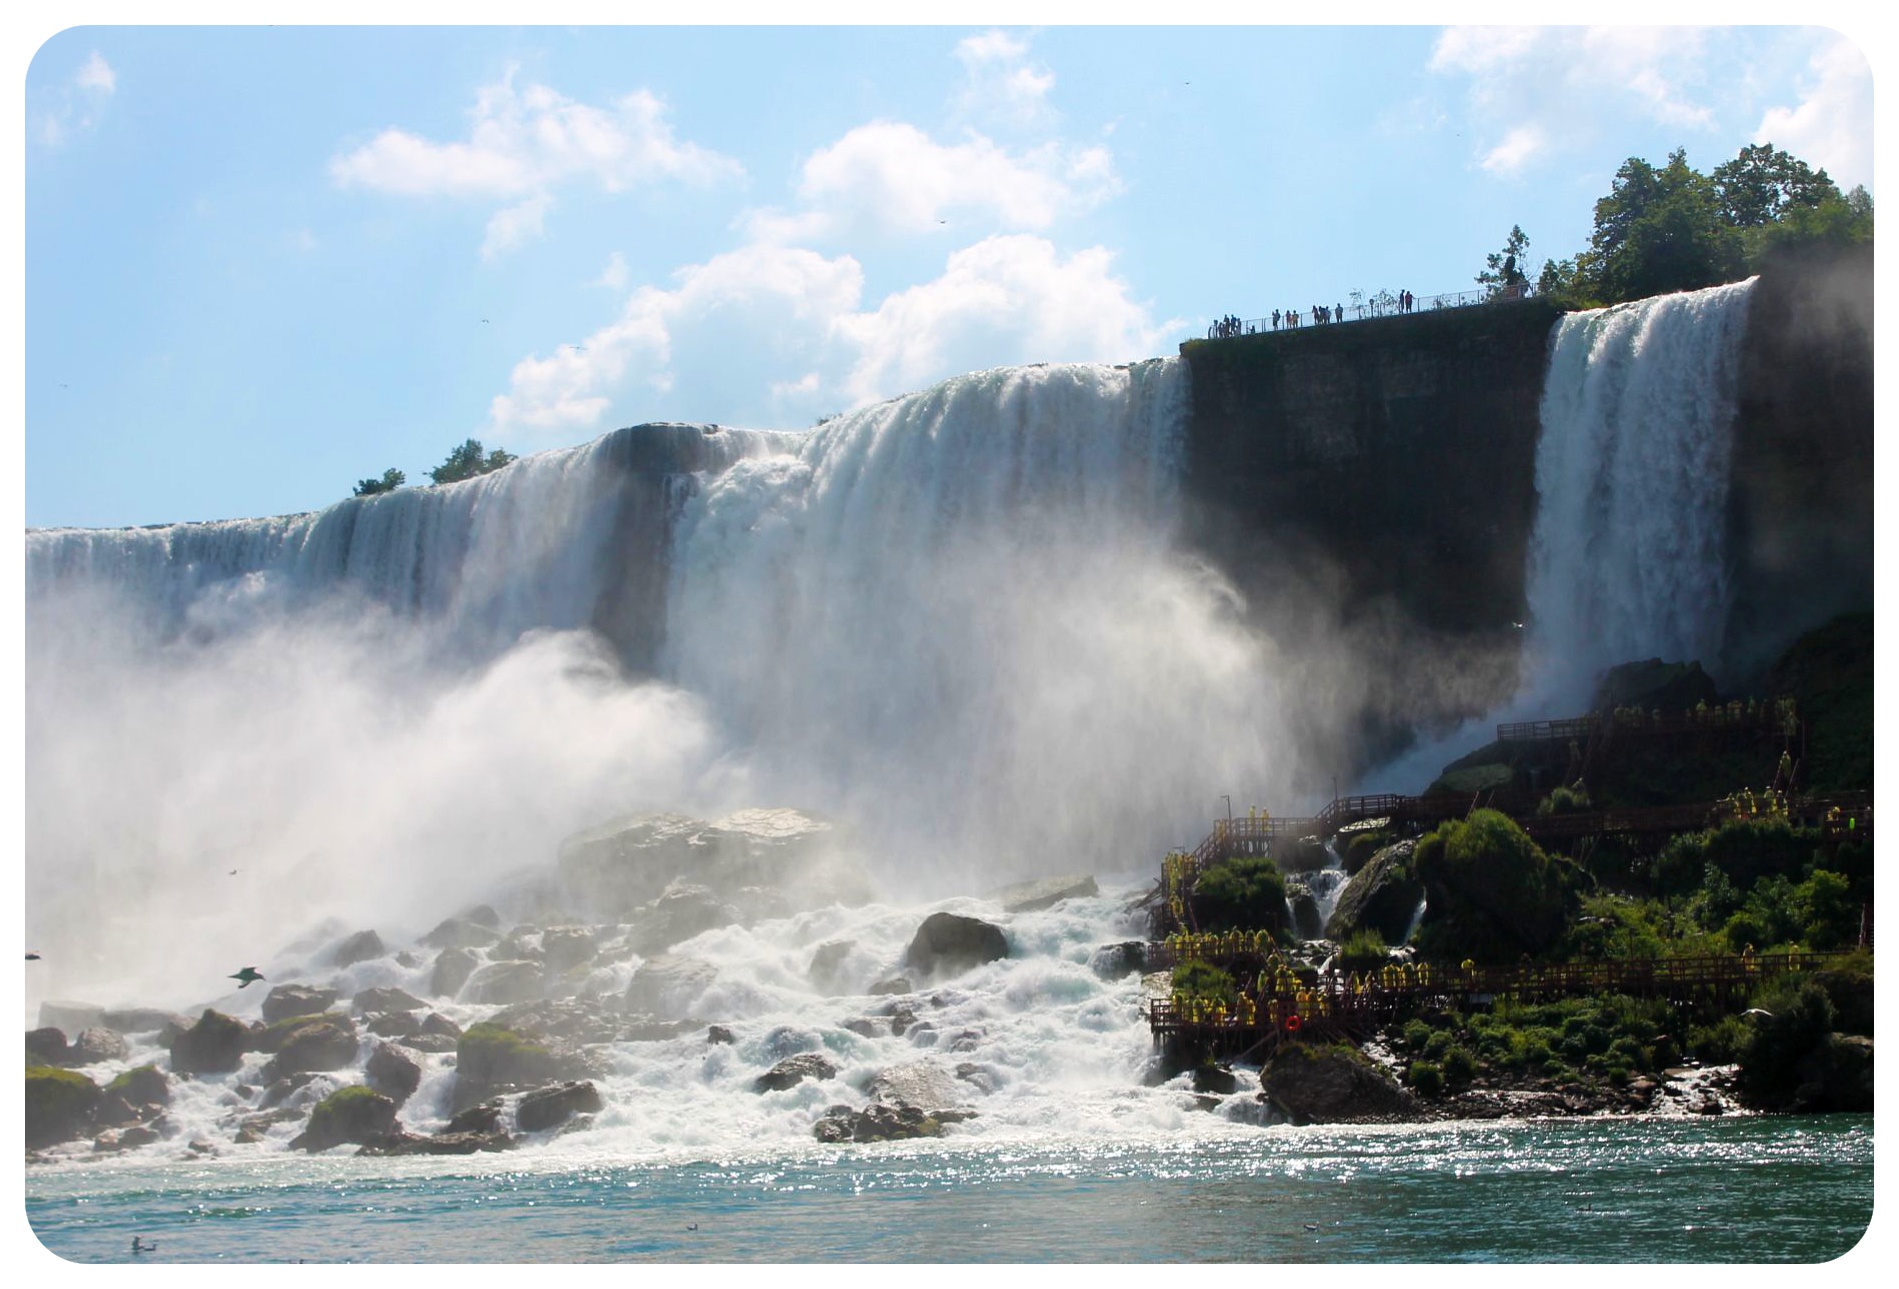 Niagara Falls smack down : The American falls vs The Canadian Falls ...